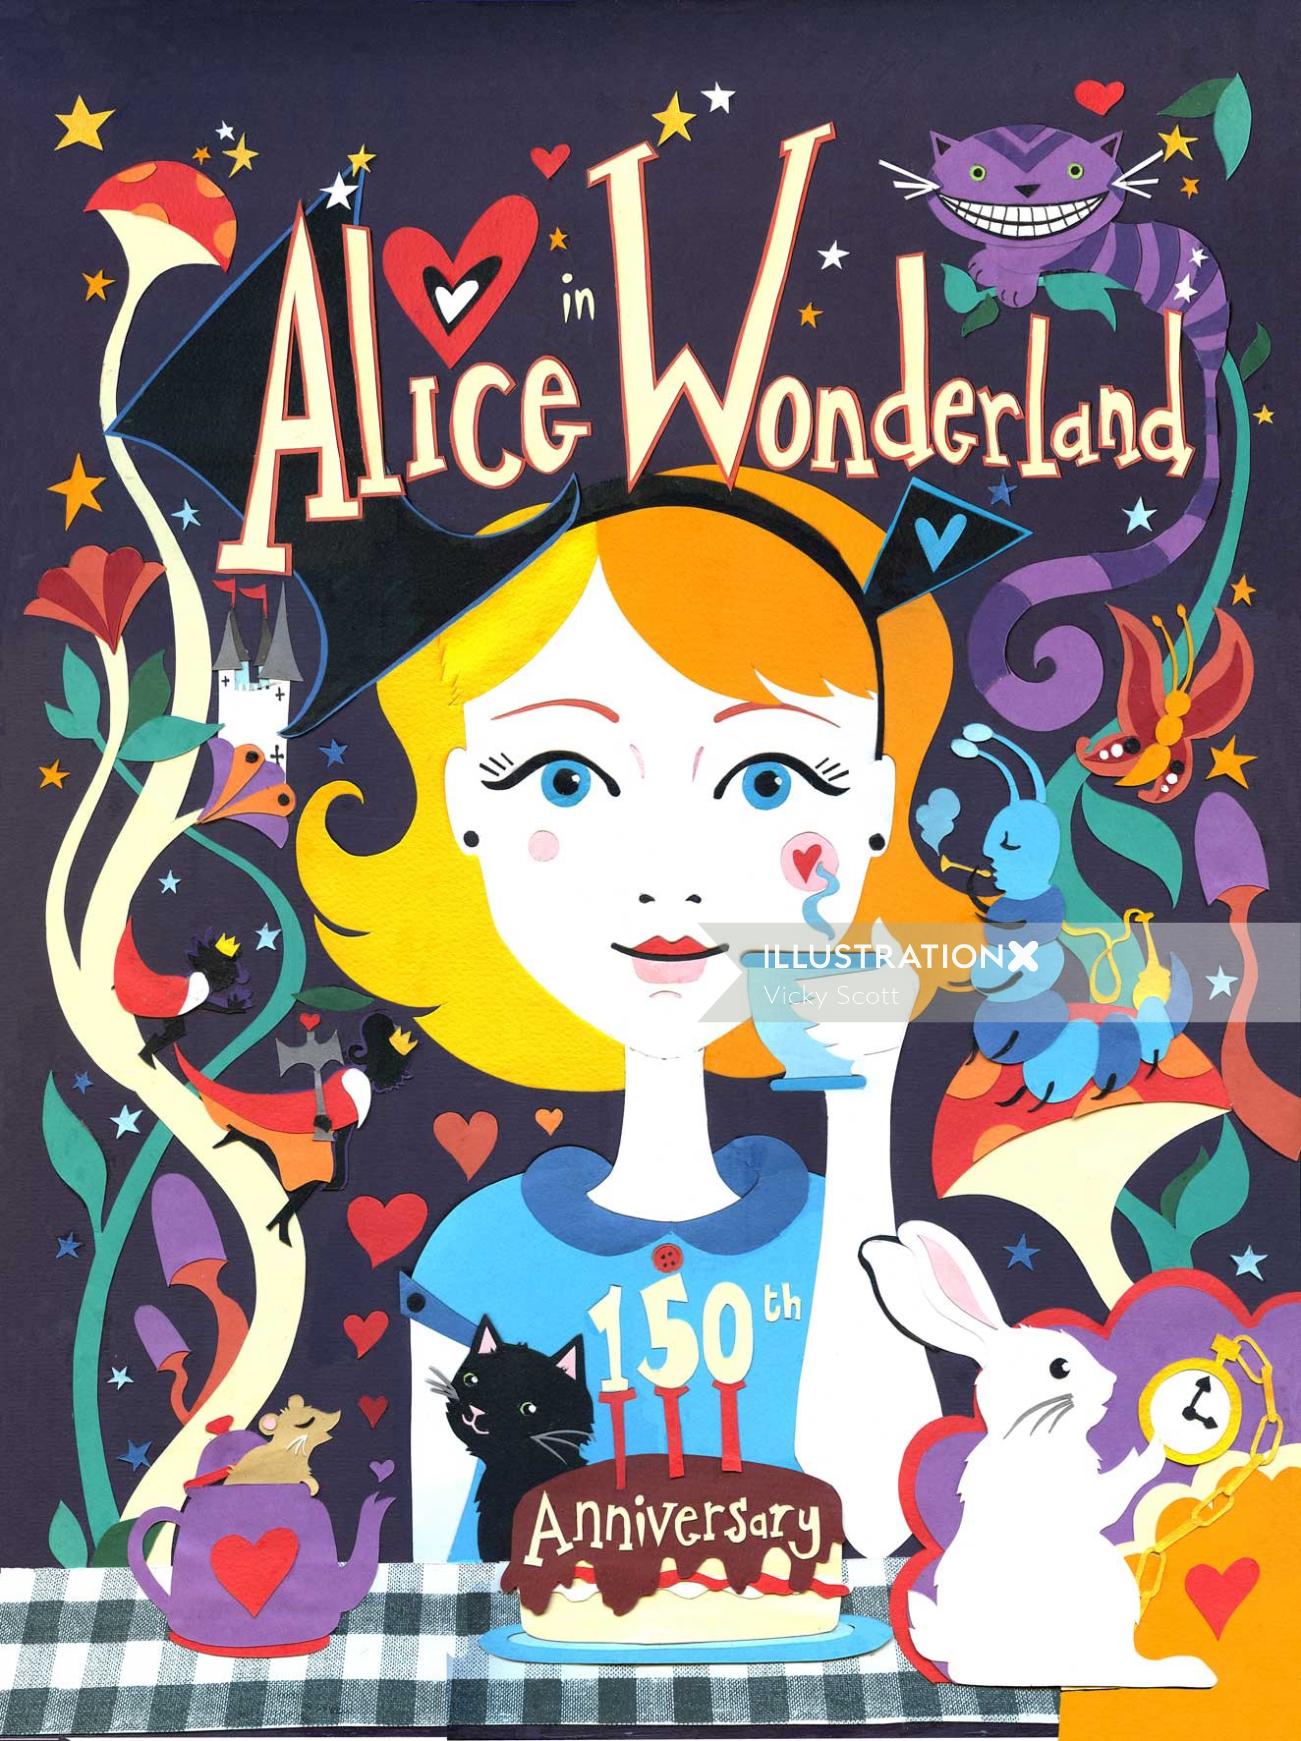 Alice in Wonderland illustration by Vicky Scott